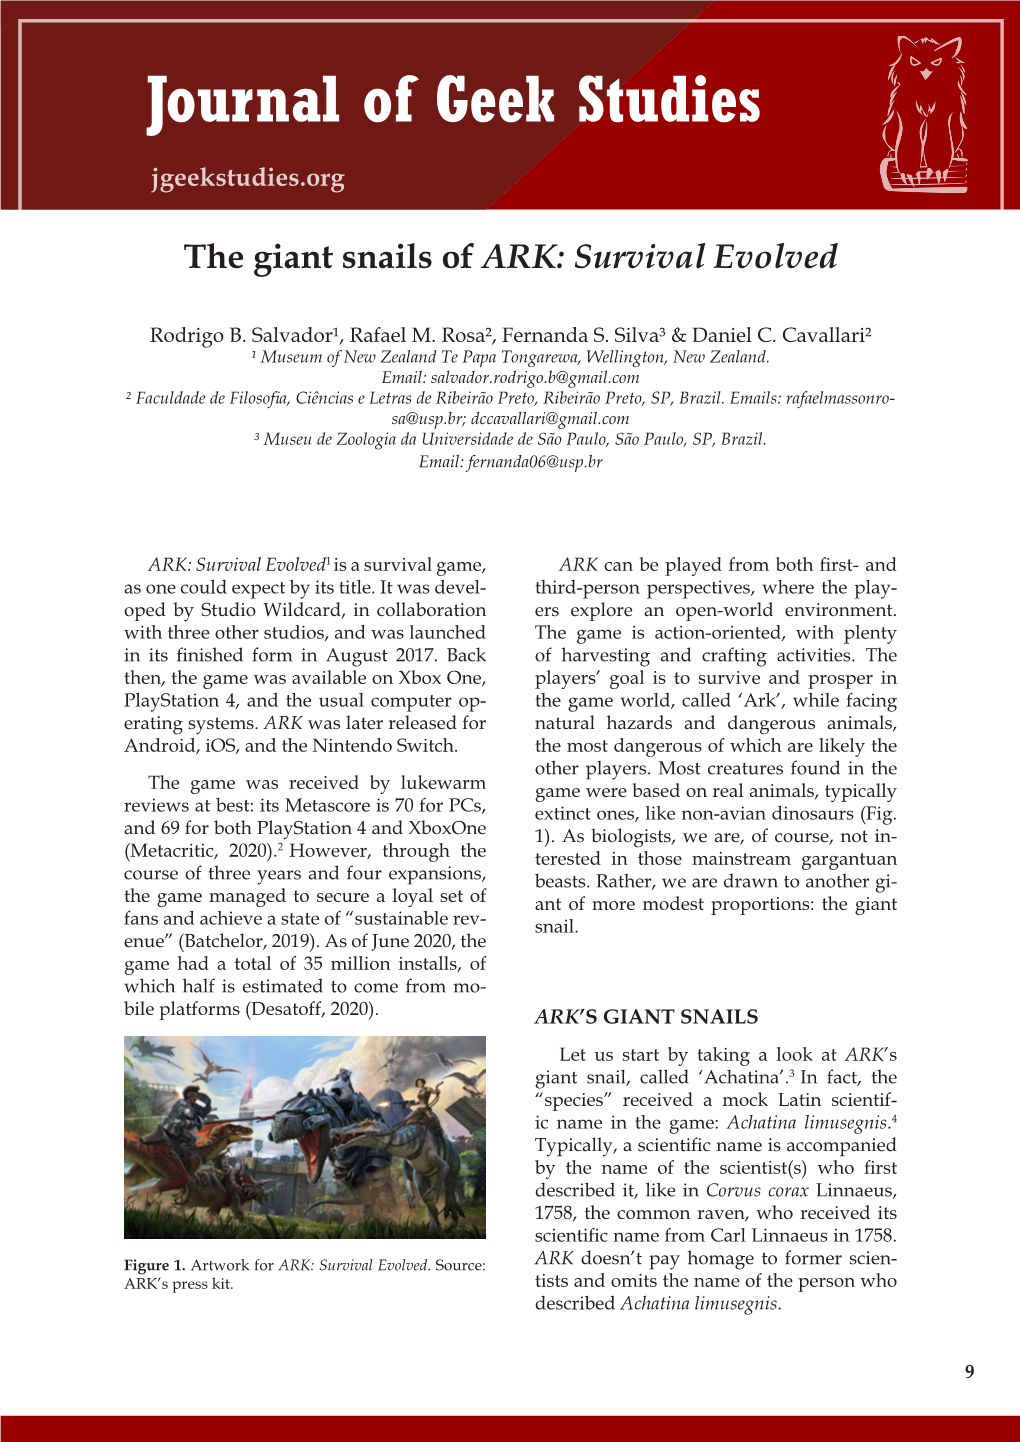 The Giant Snails of ARK: Survival Evolved